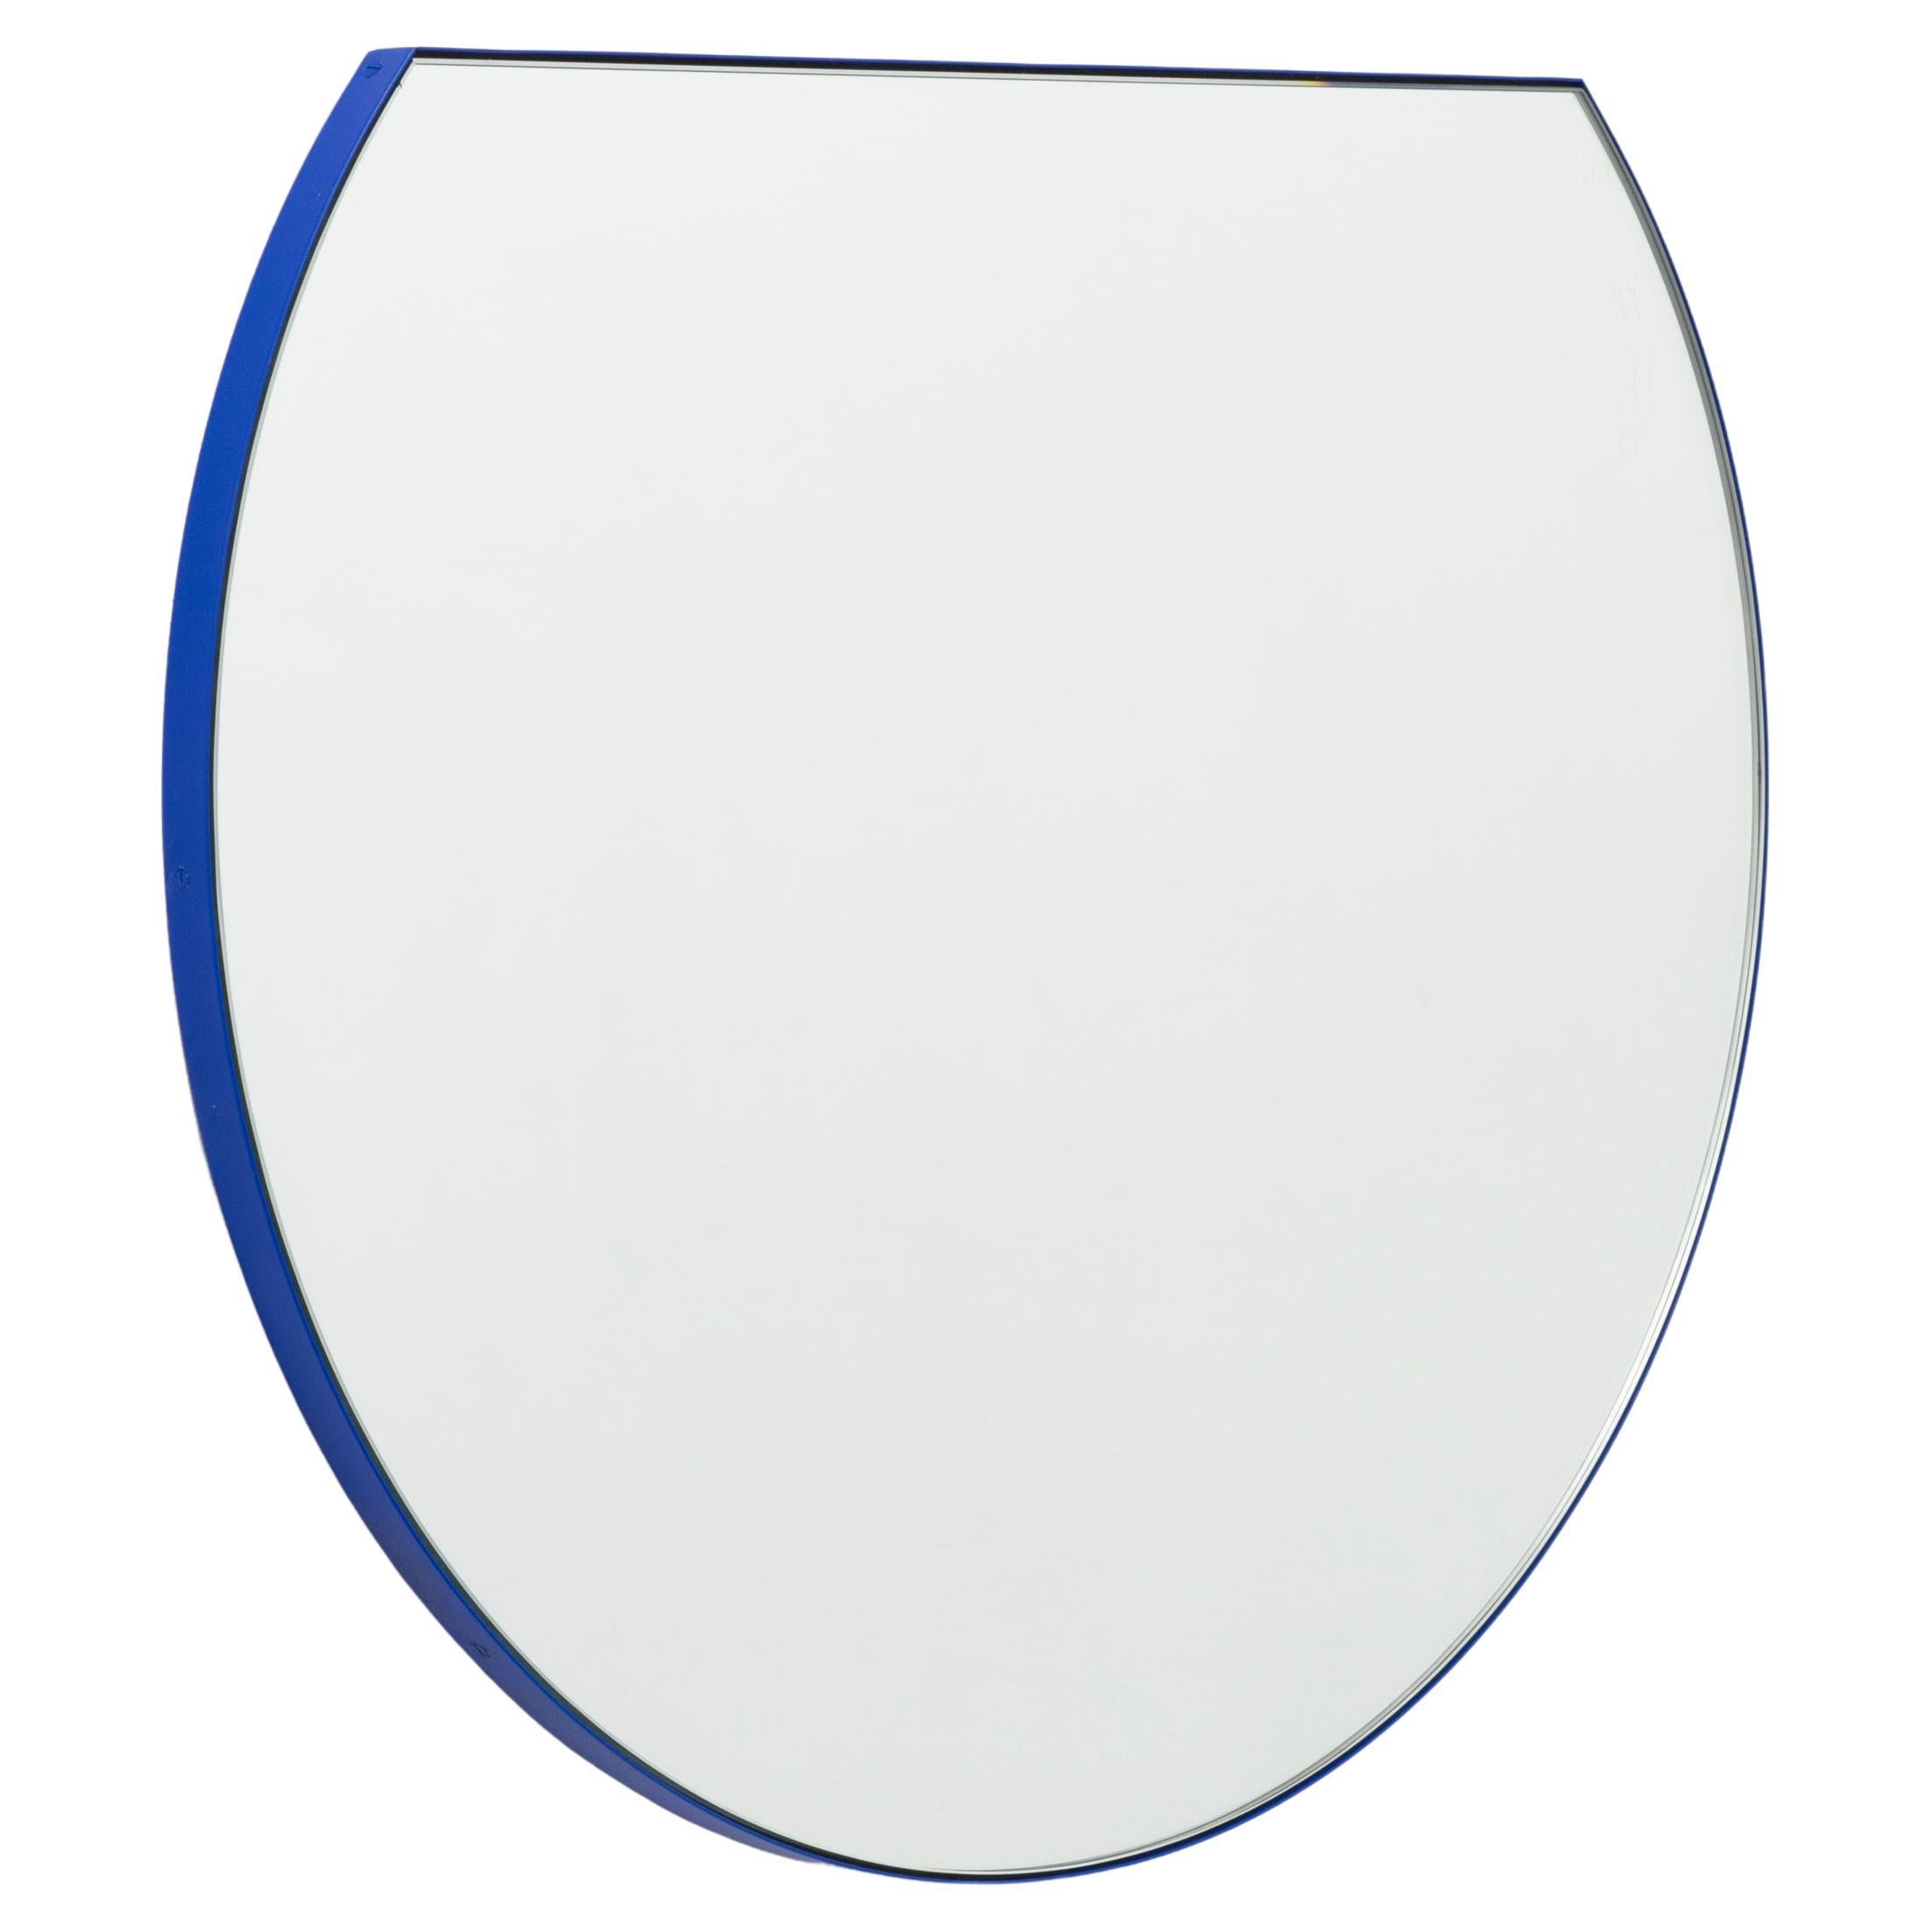 Orbis Trecus Cropped Circular Modern Mirror with Blue Frame, XL